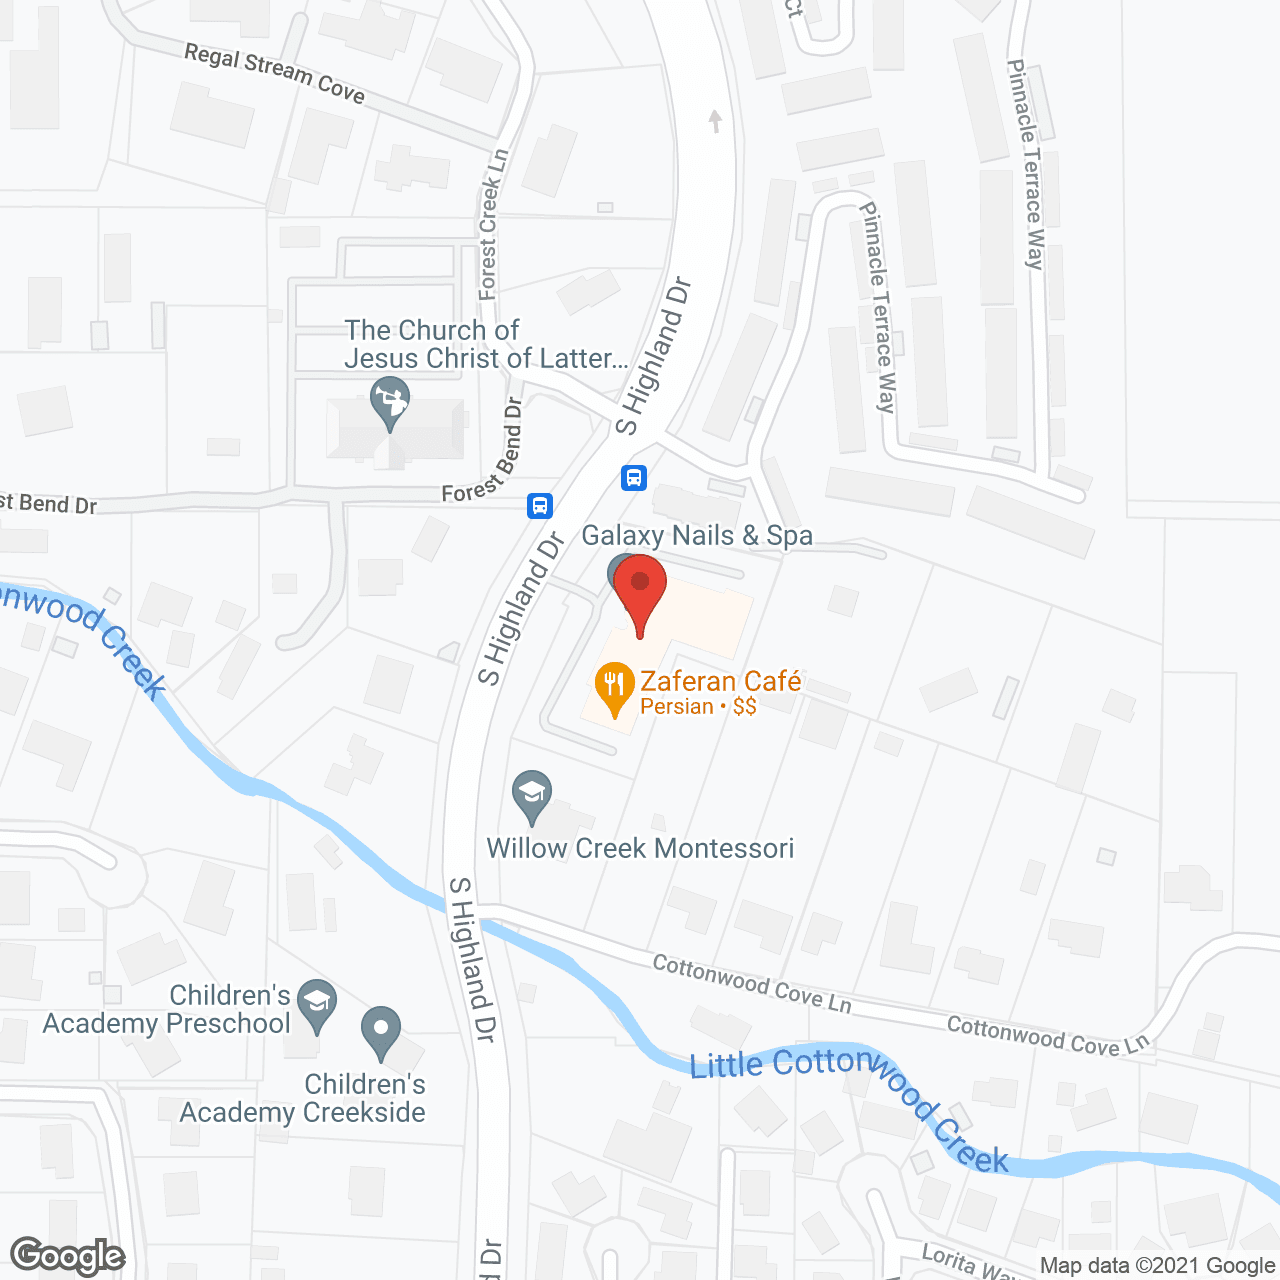 TheKey of Salt Lake City in google map